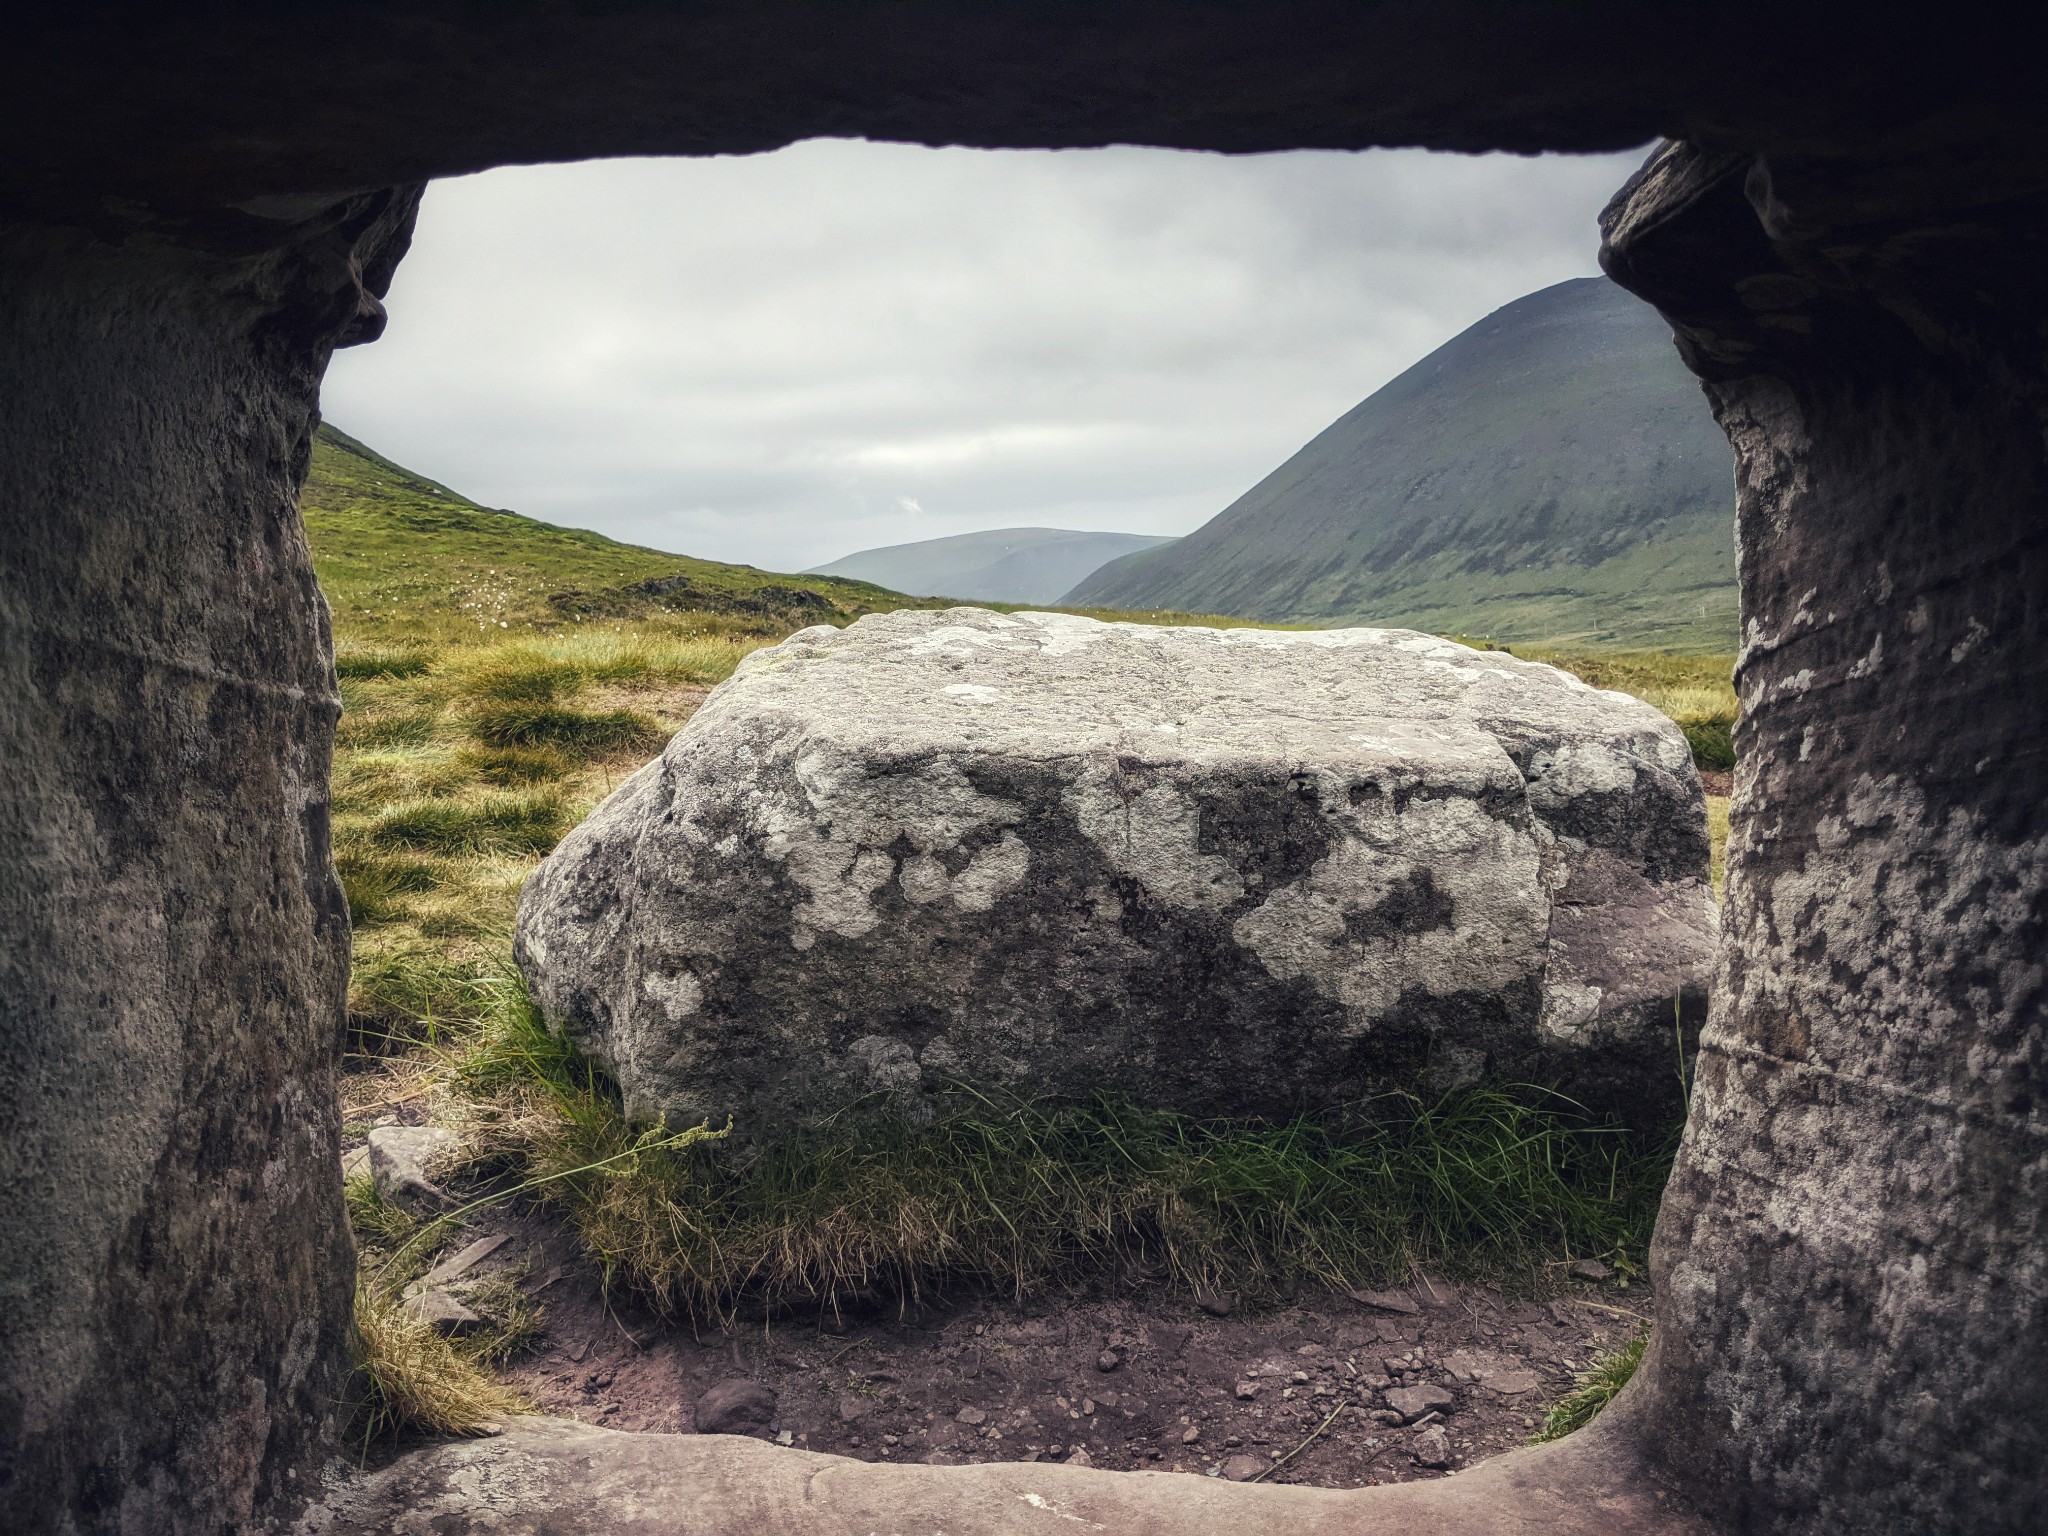 View from inside the Dwarfie Stane, Orkney - image by David C. Weinczok